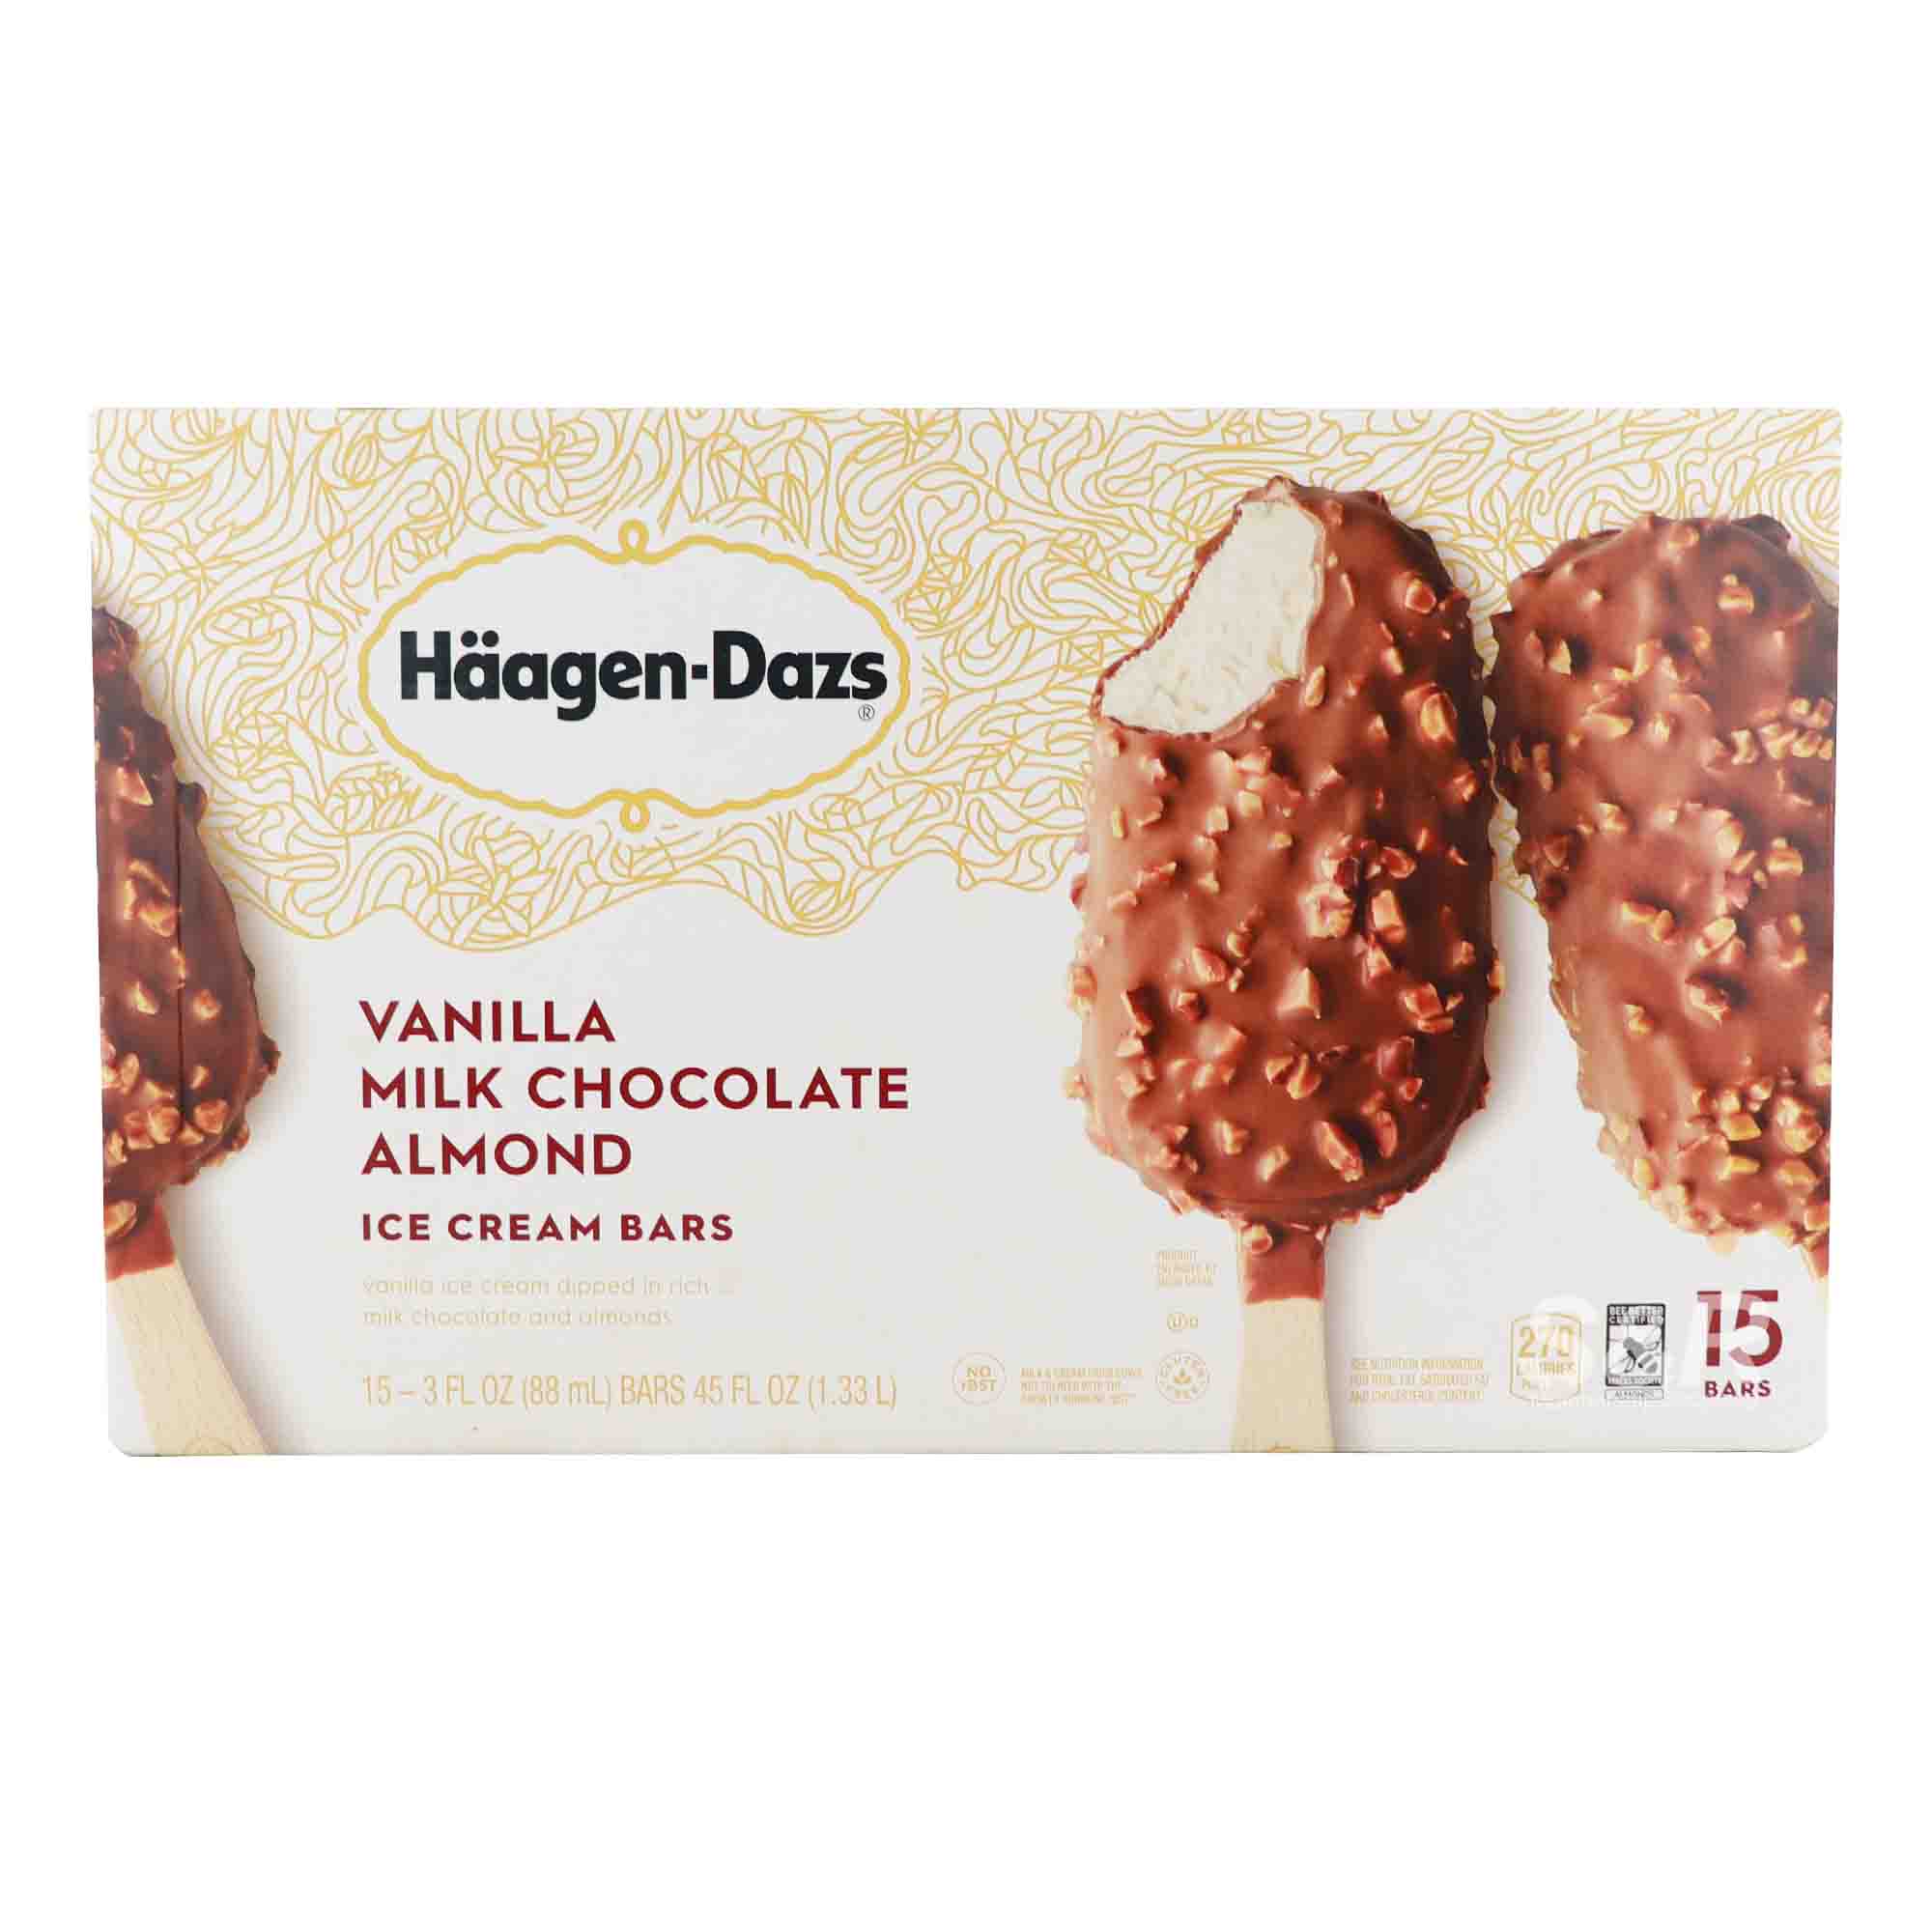 Haagen-Dazs Vanilla Milk Chocolate Almond Ice Cream Bars 15pcs